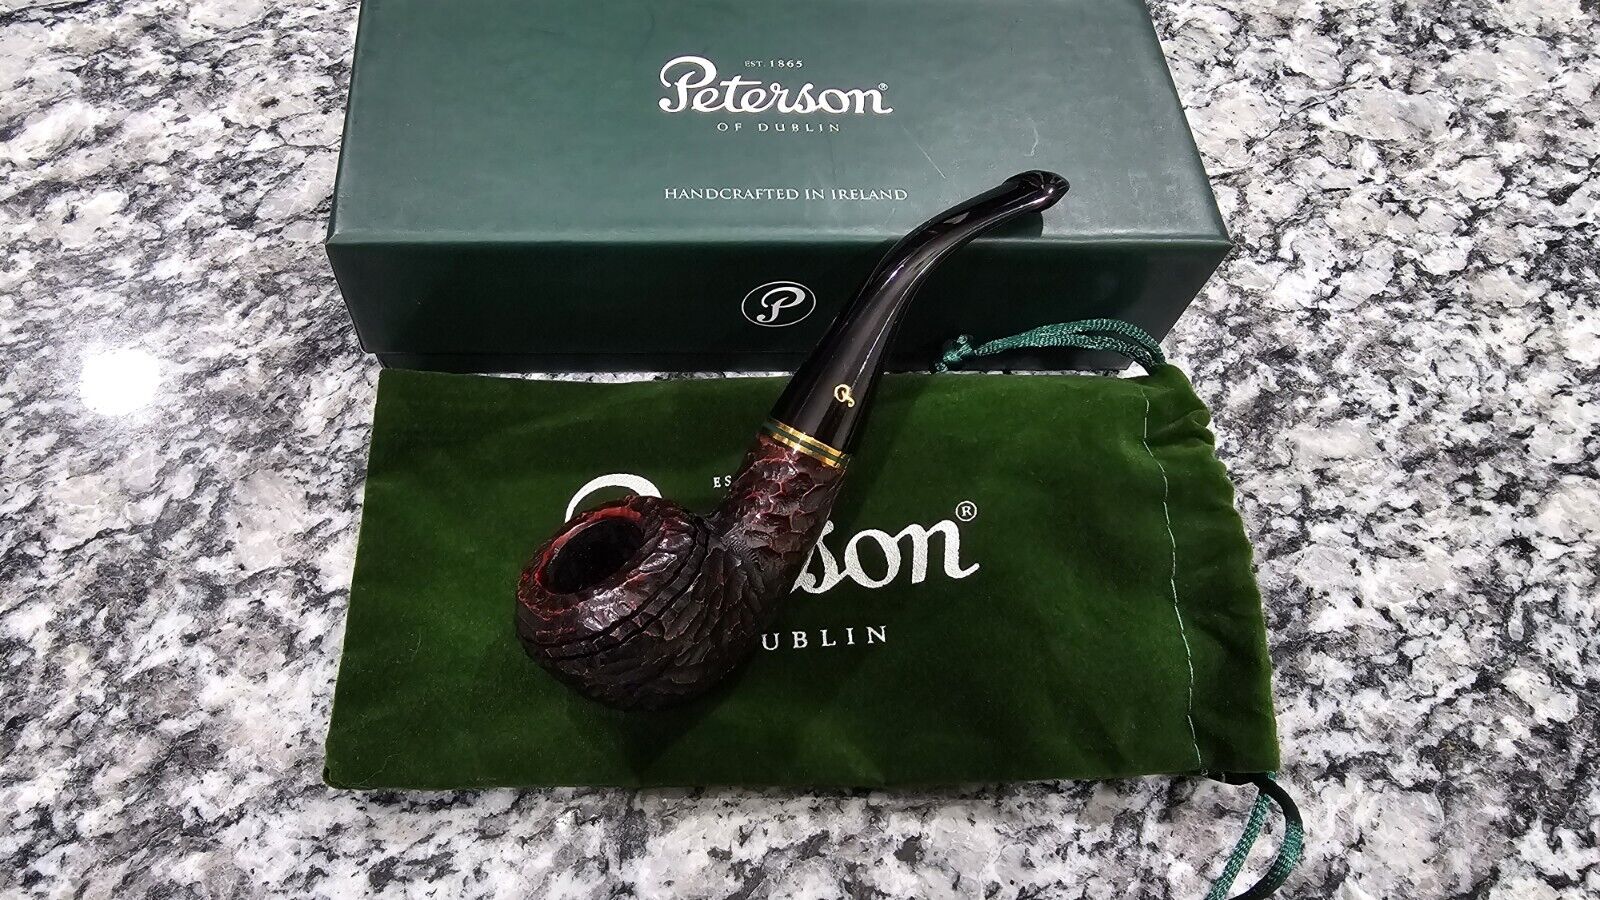 Peterson Emerald Rusticated Bent Rhodesian (999) P-Lip Tobacco Pipe - New